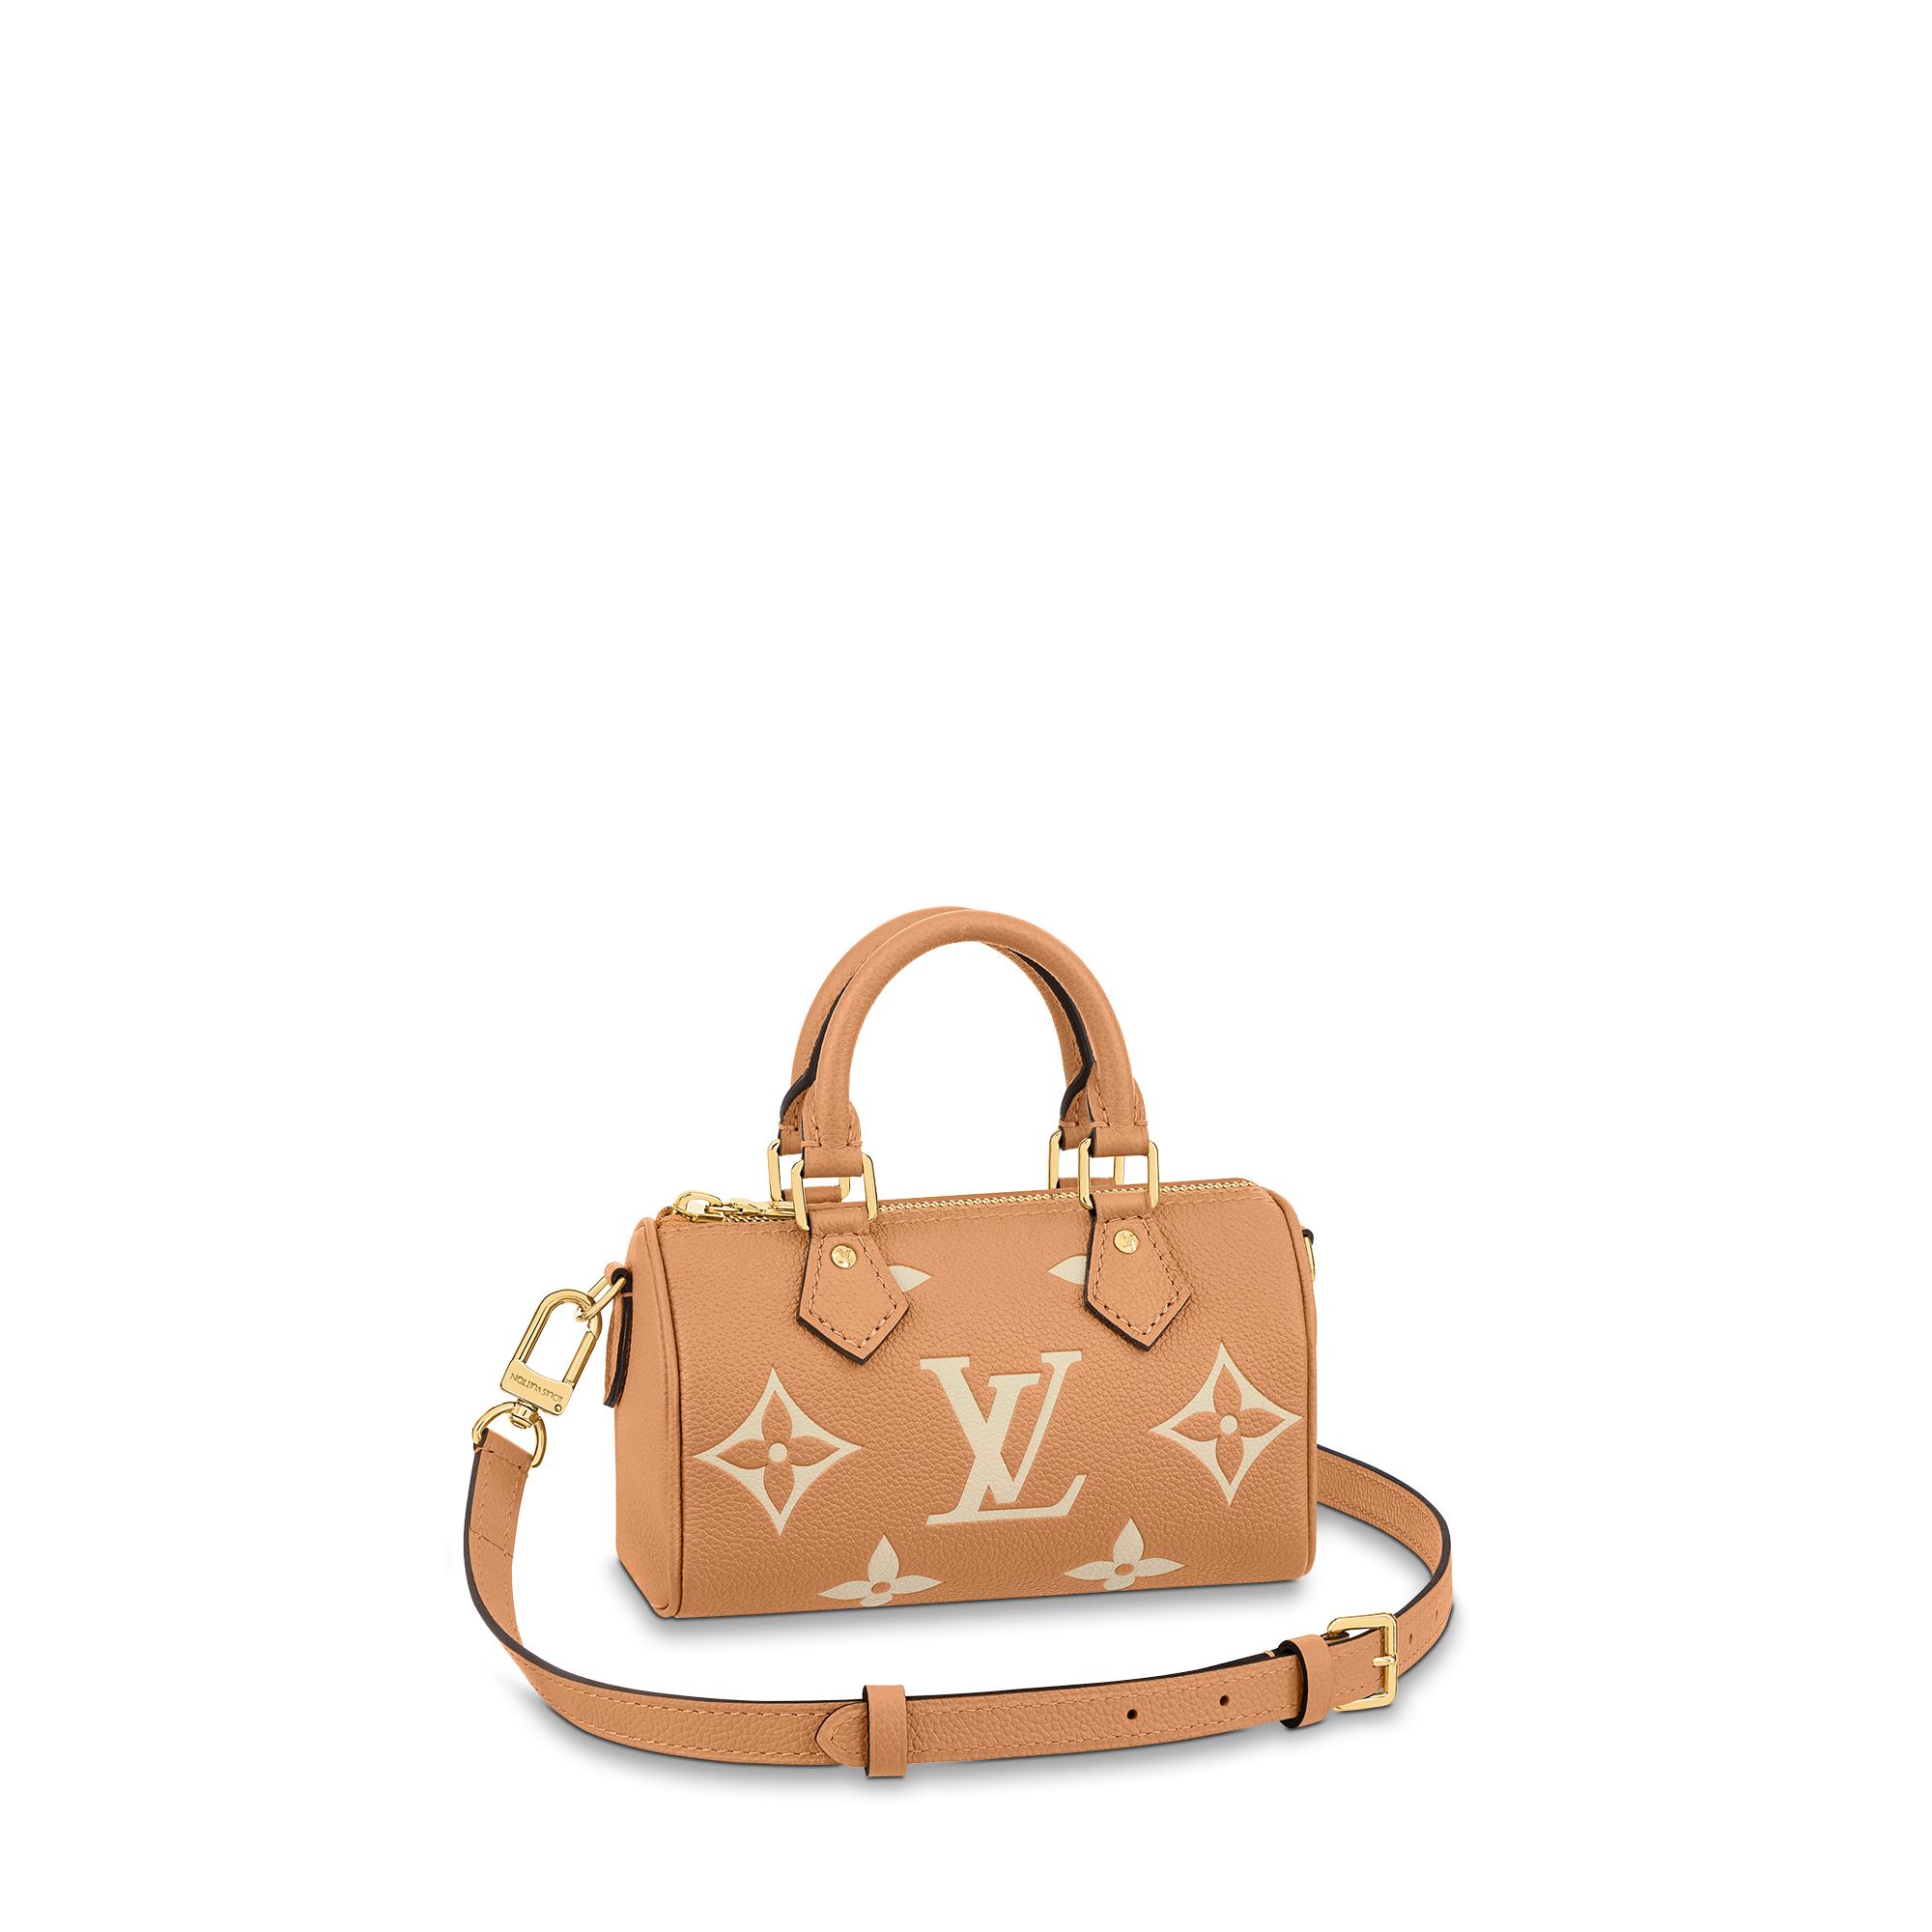 Louis Vuitton Nano Speedy - Women - Small Leather Goods M81457 - $223.60 